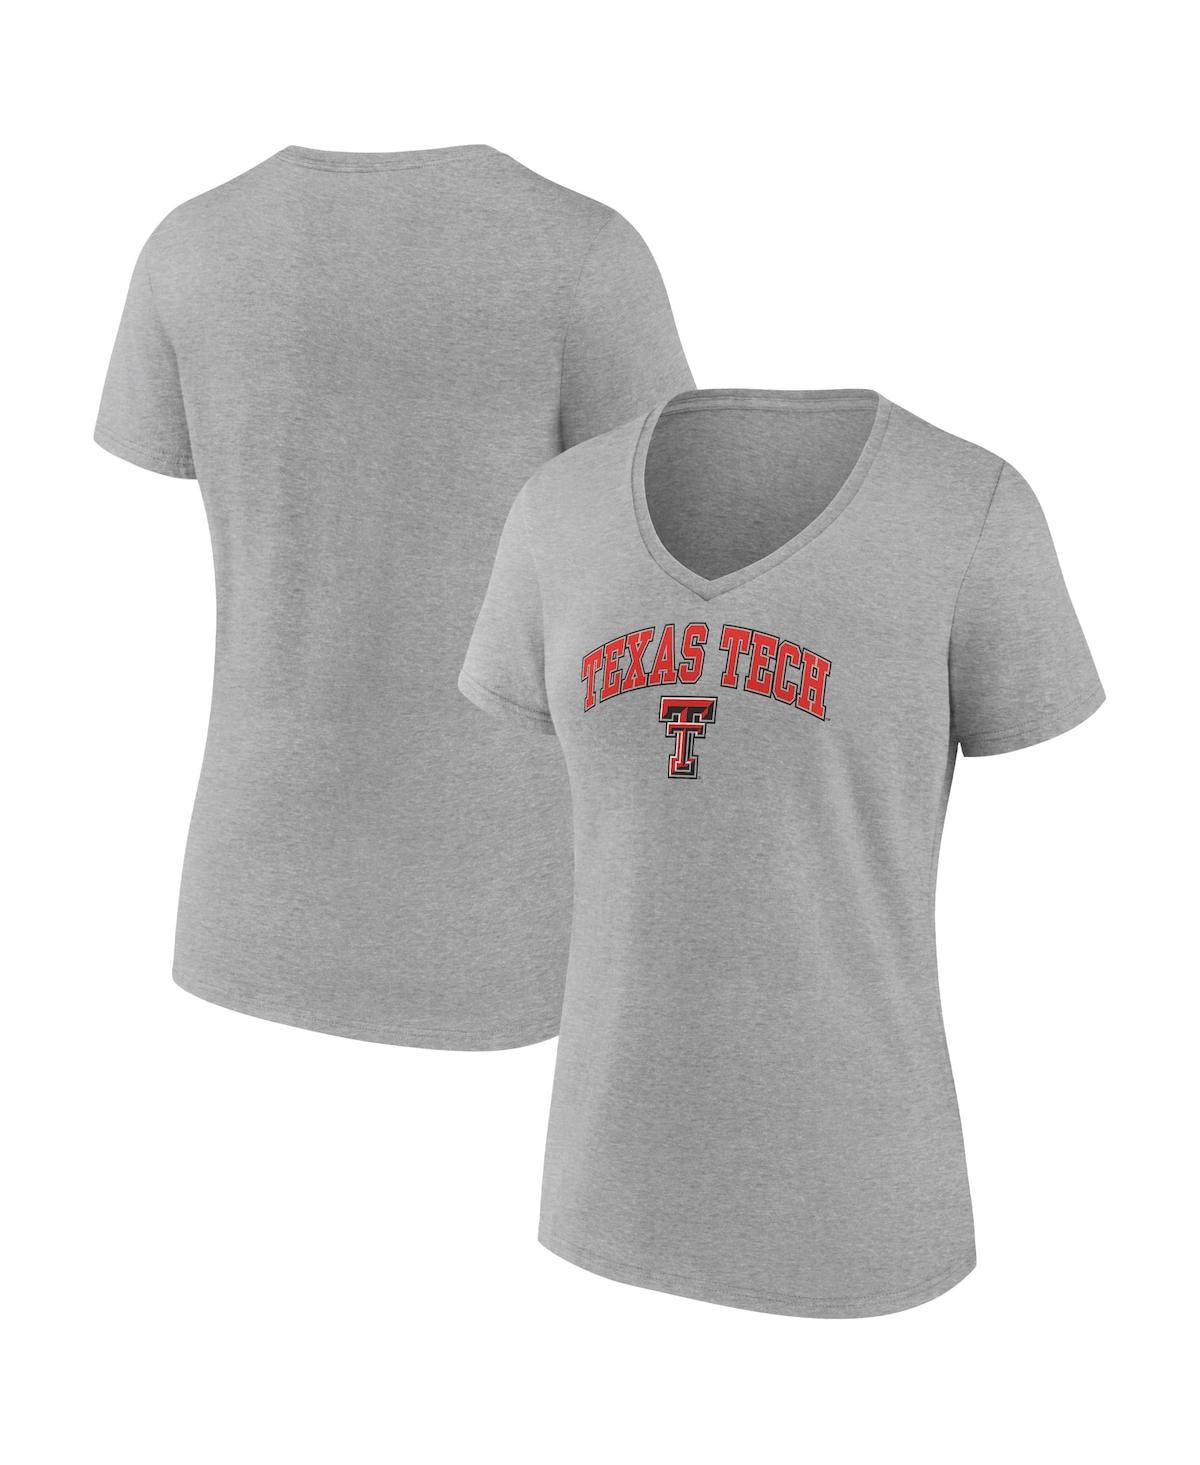 Women's Fanatics Heather Gray Texas Tech Red Raiders Evergreen Campus V-Neck T-shirt - Heather Gray